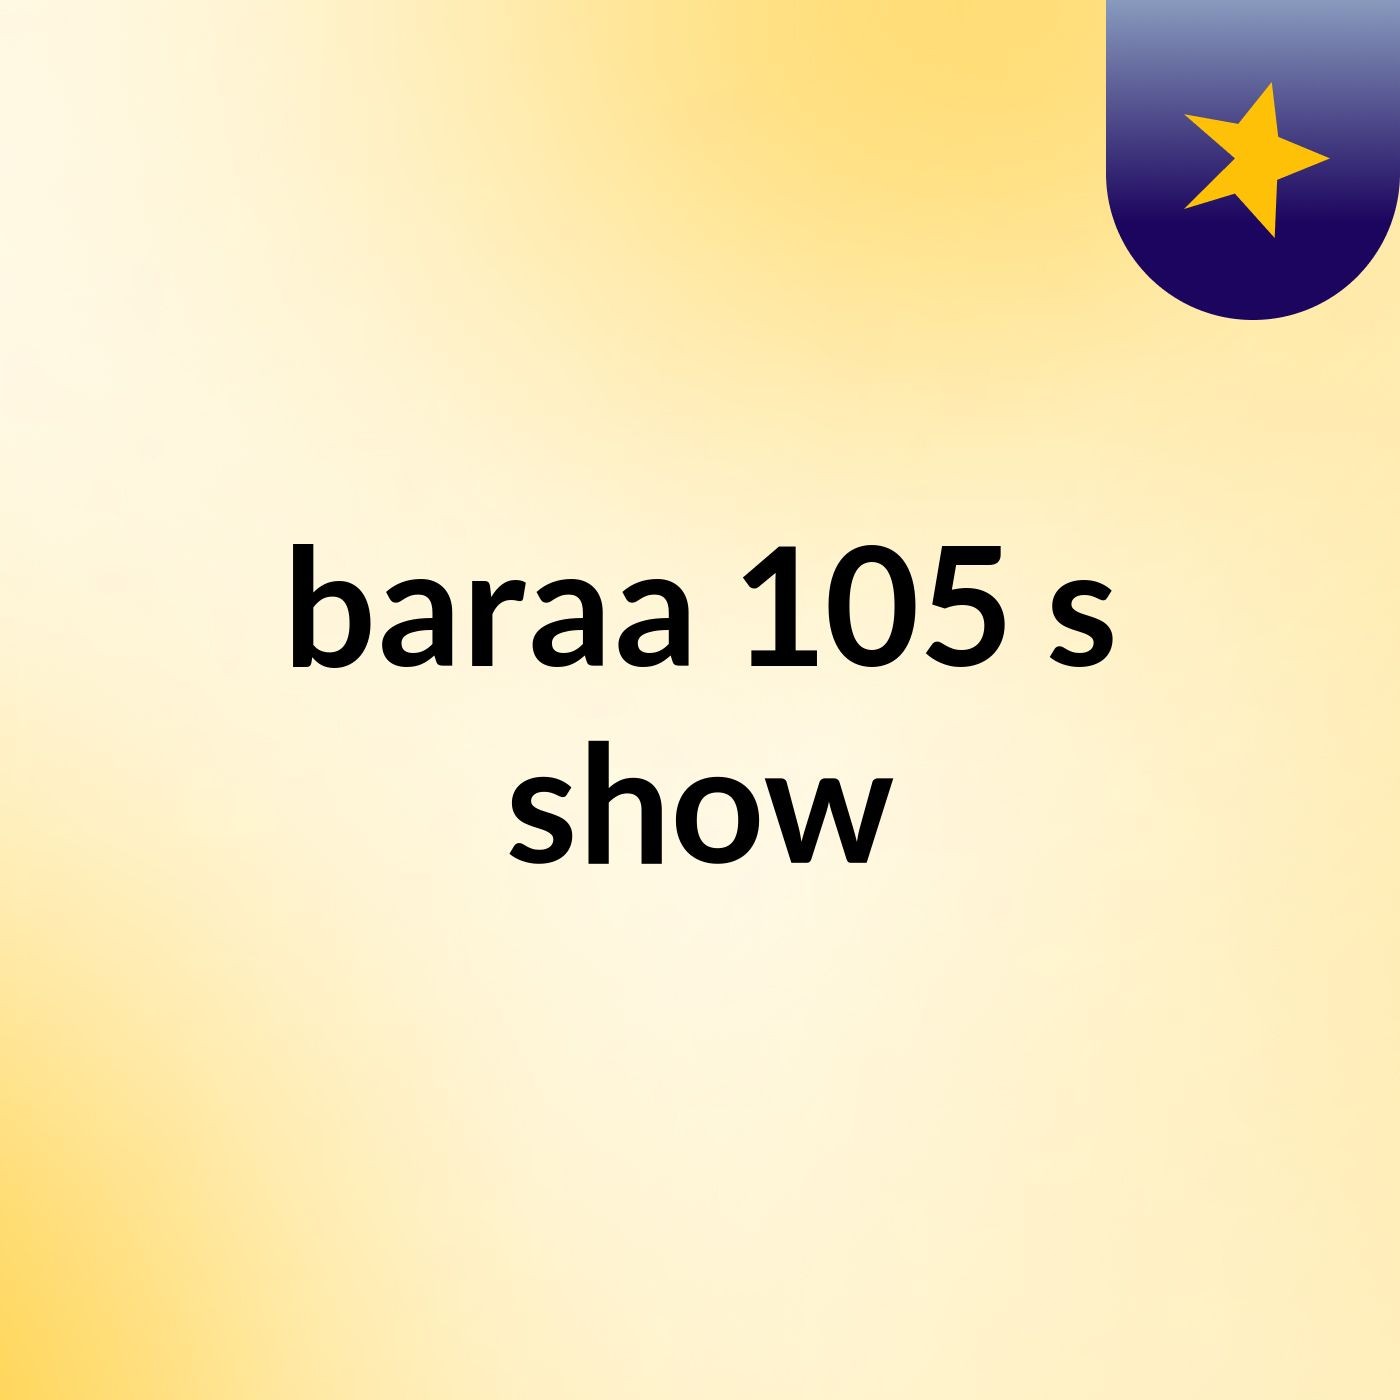 baraa 105's show